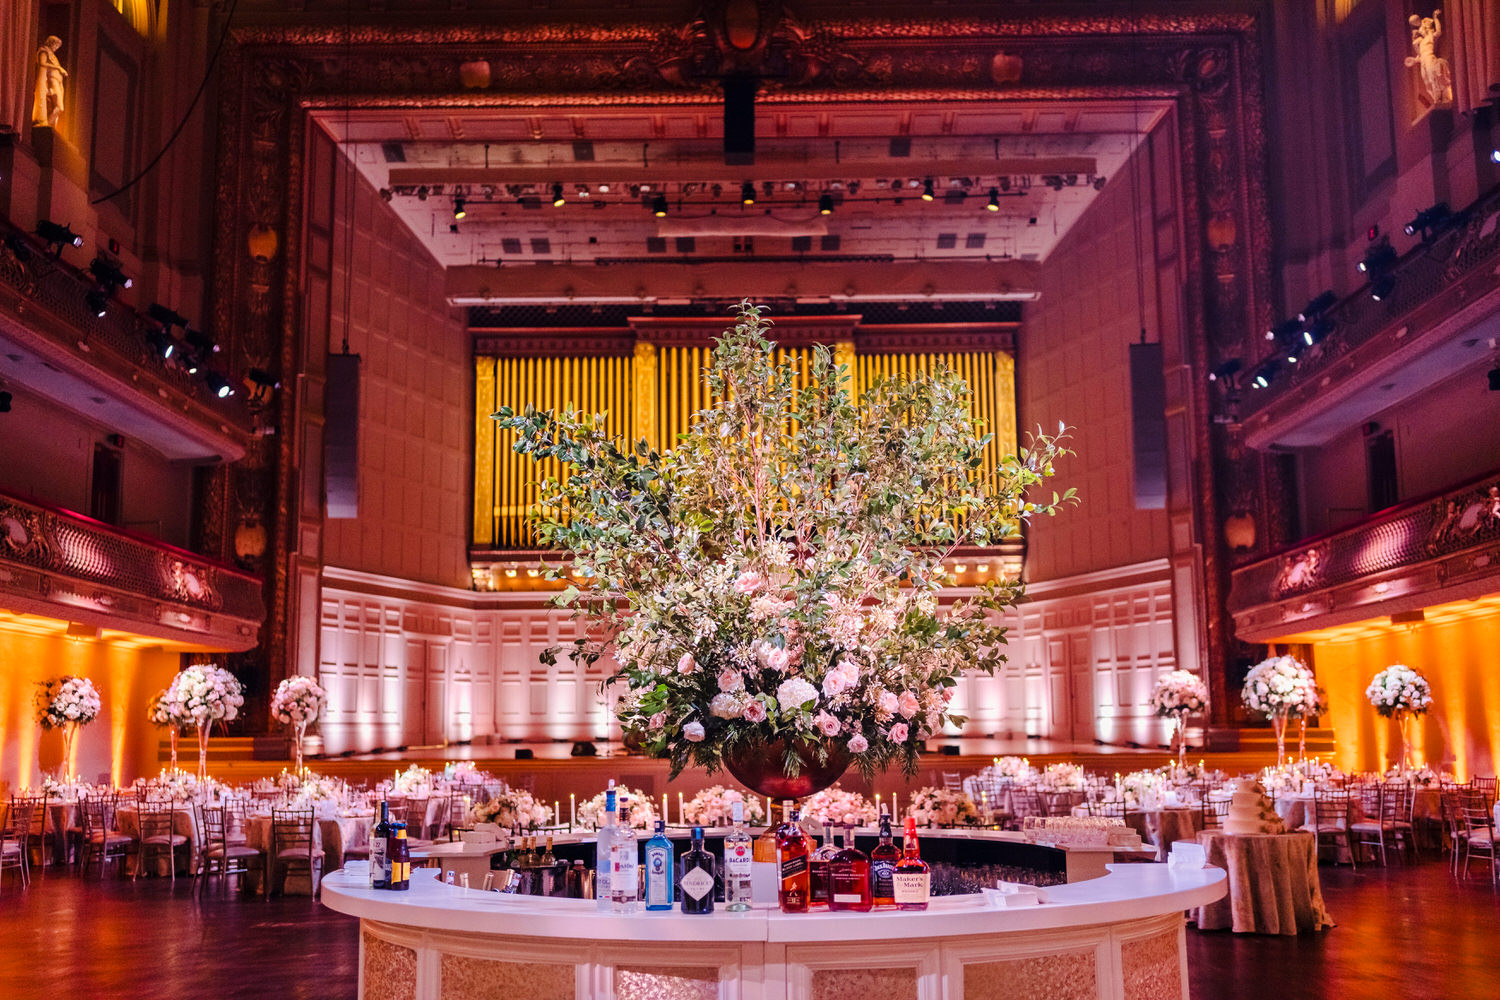 A wedding reception in a large ballroom.